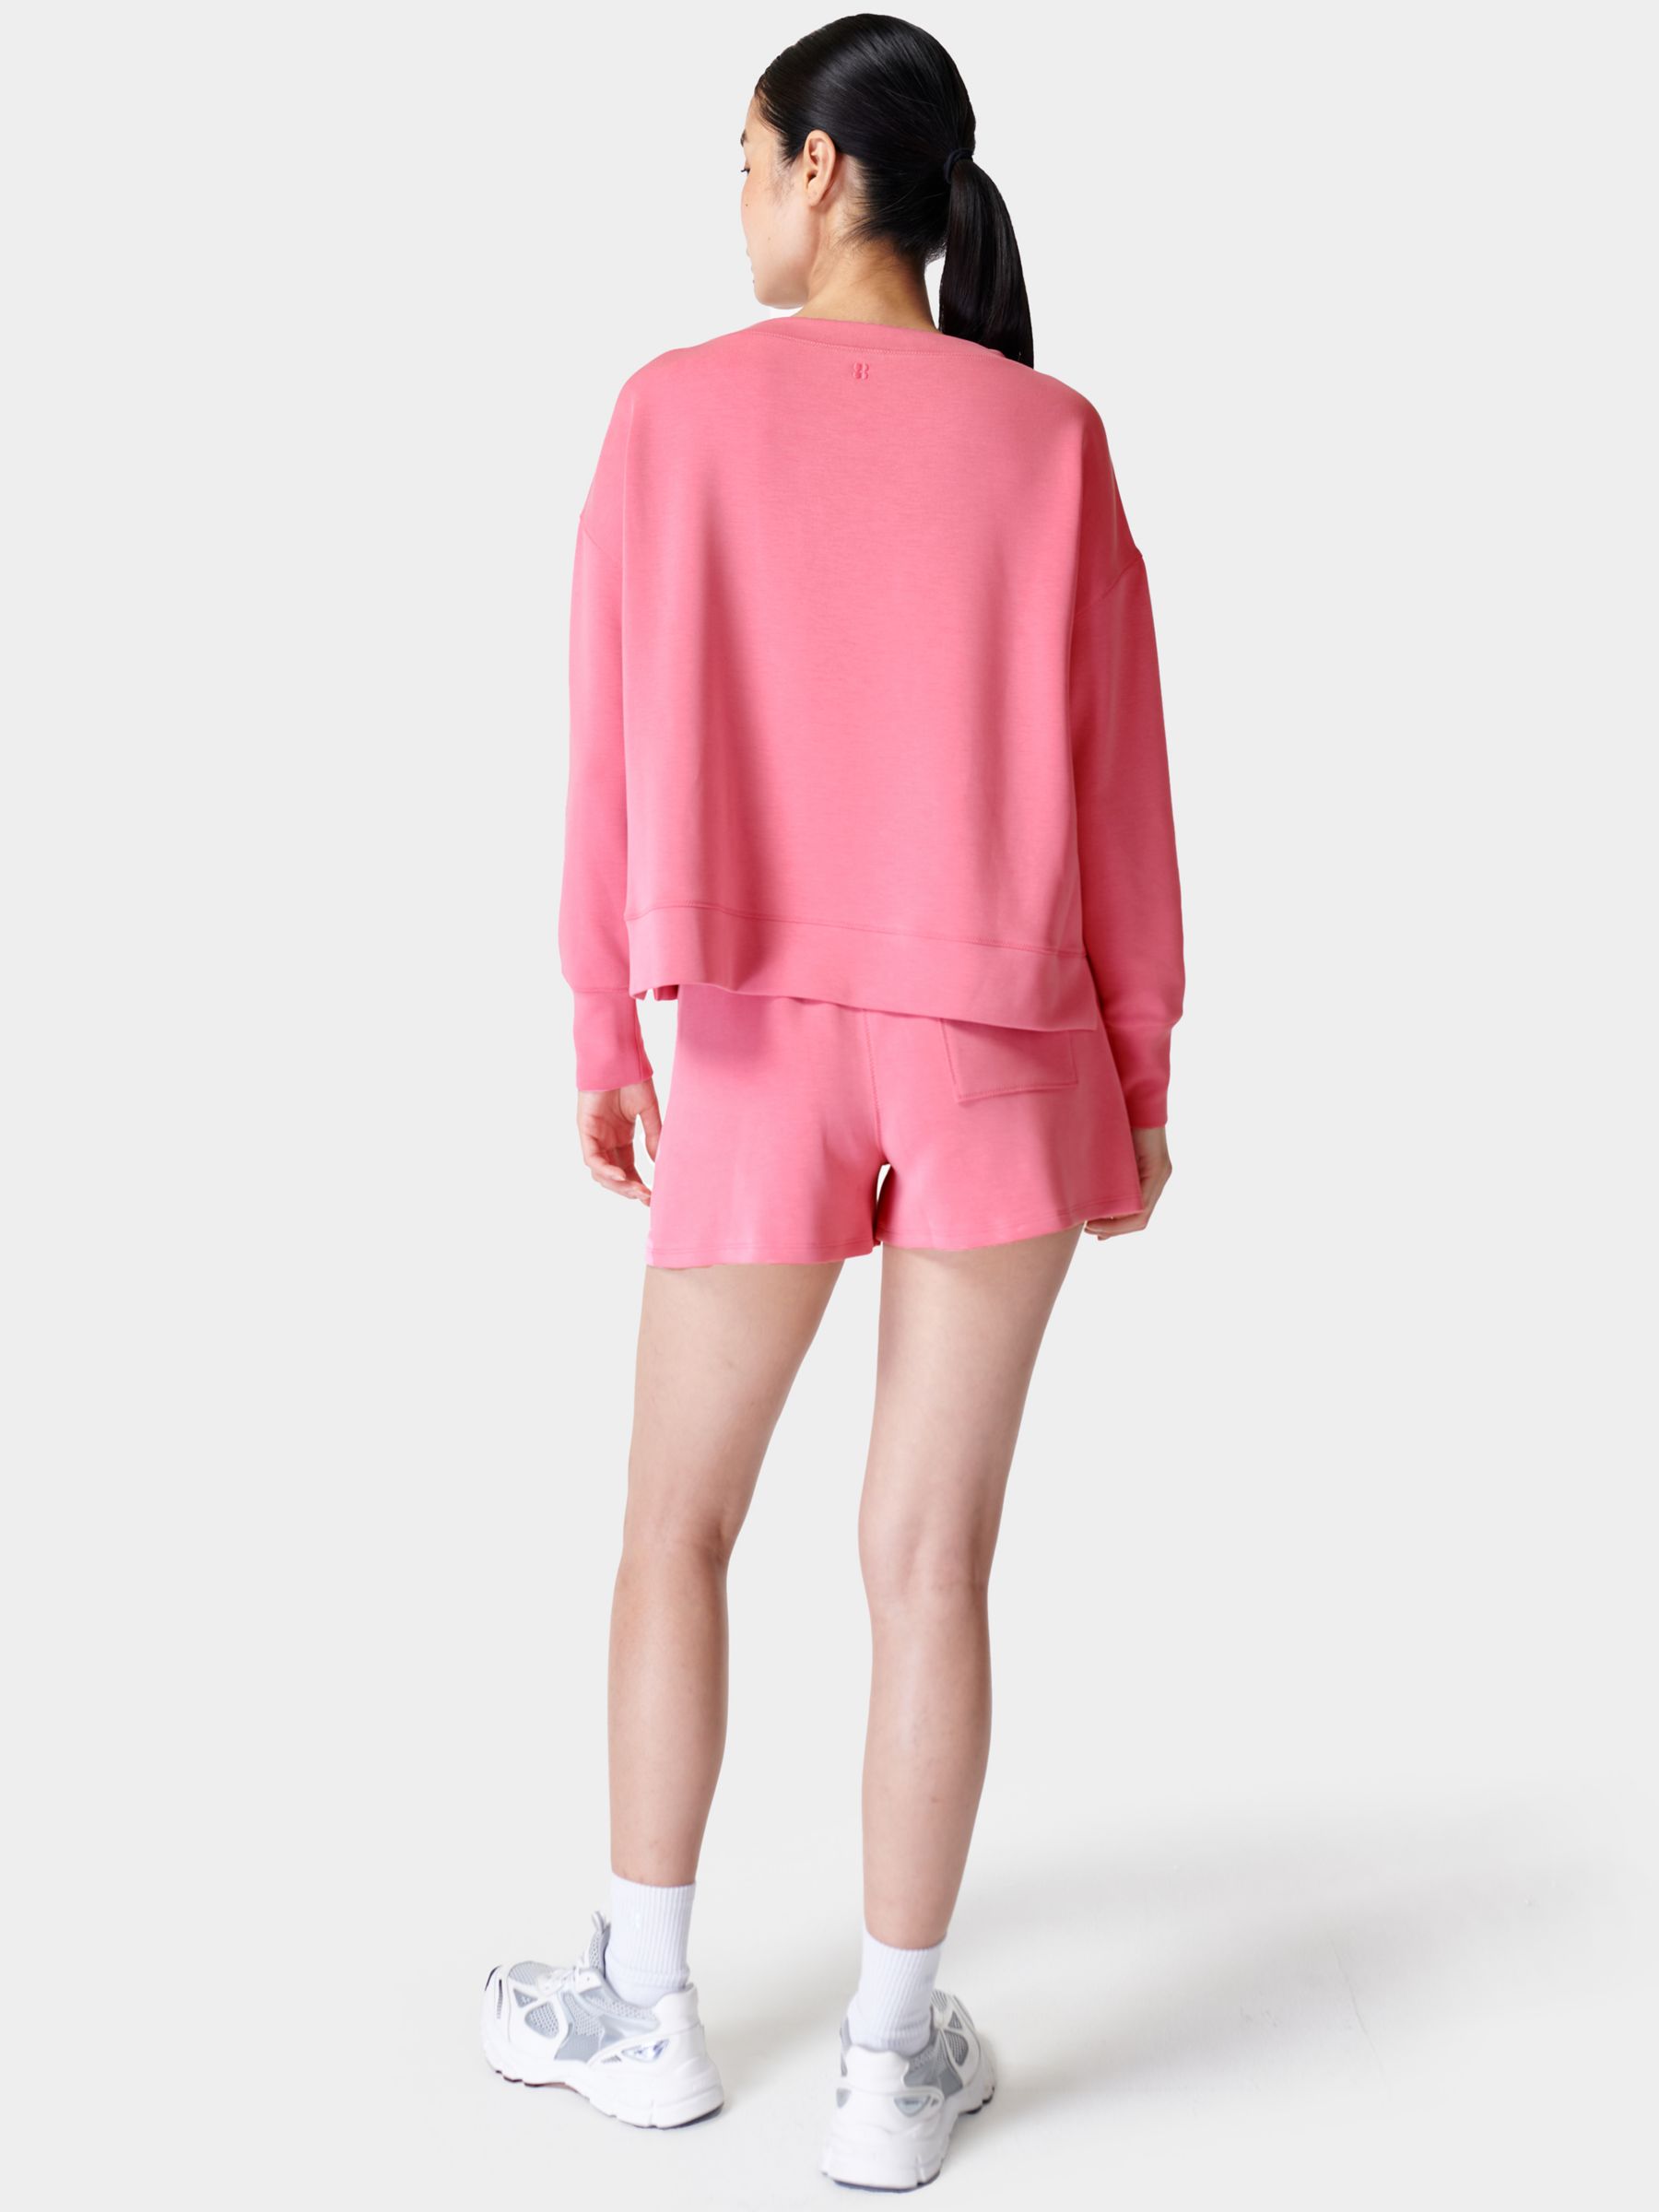 Sweaty Betty Sand Wash Cloud Weight Shorts, Lollipop Pink, XXS